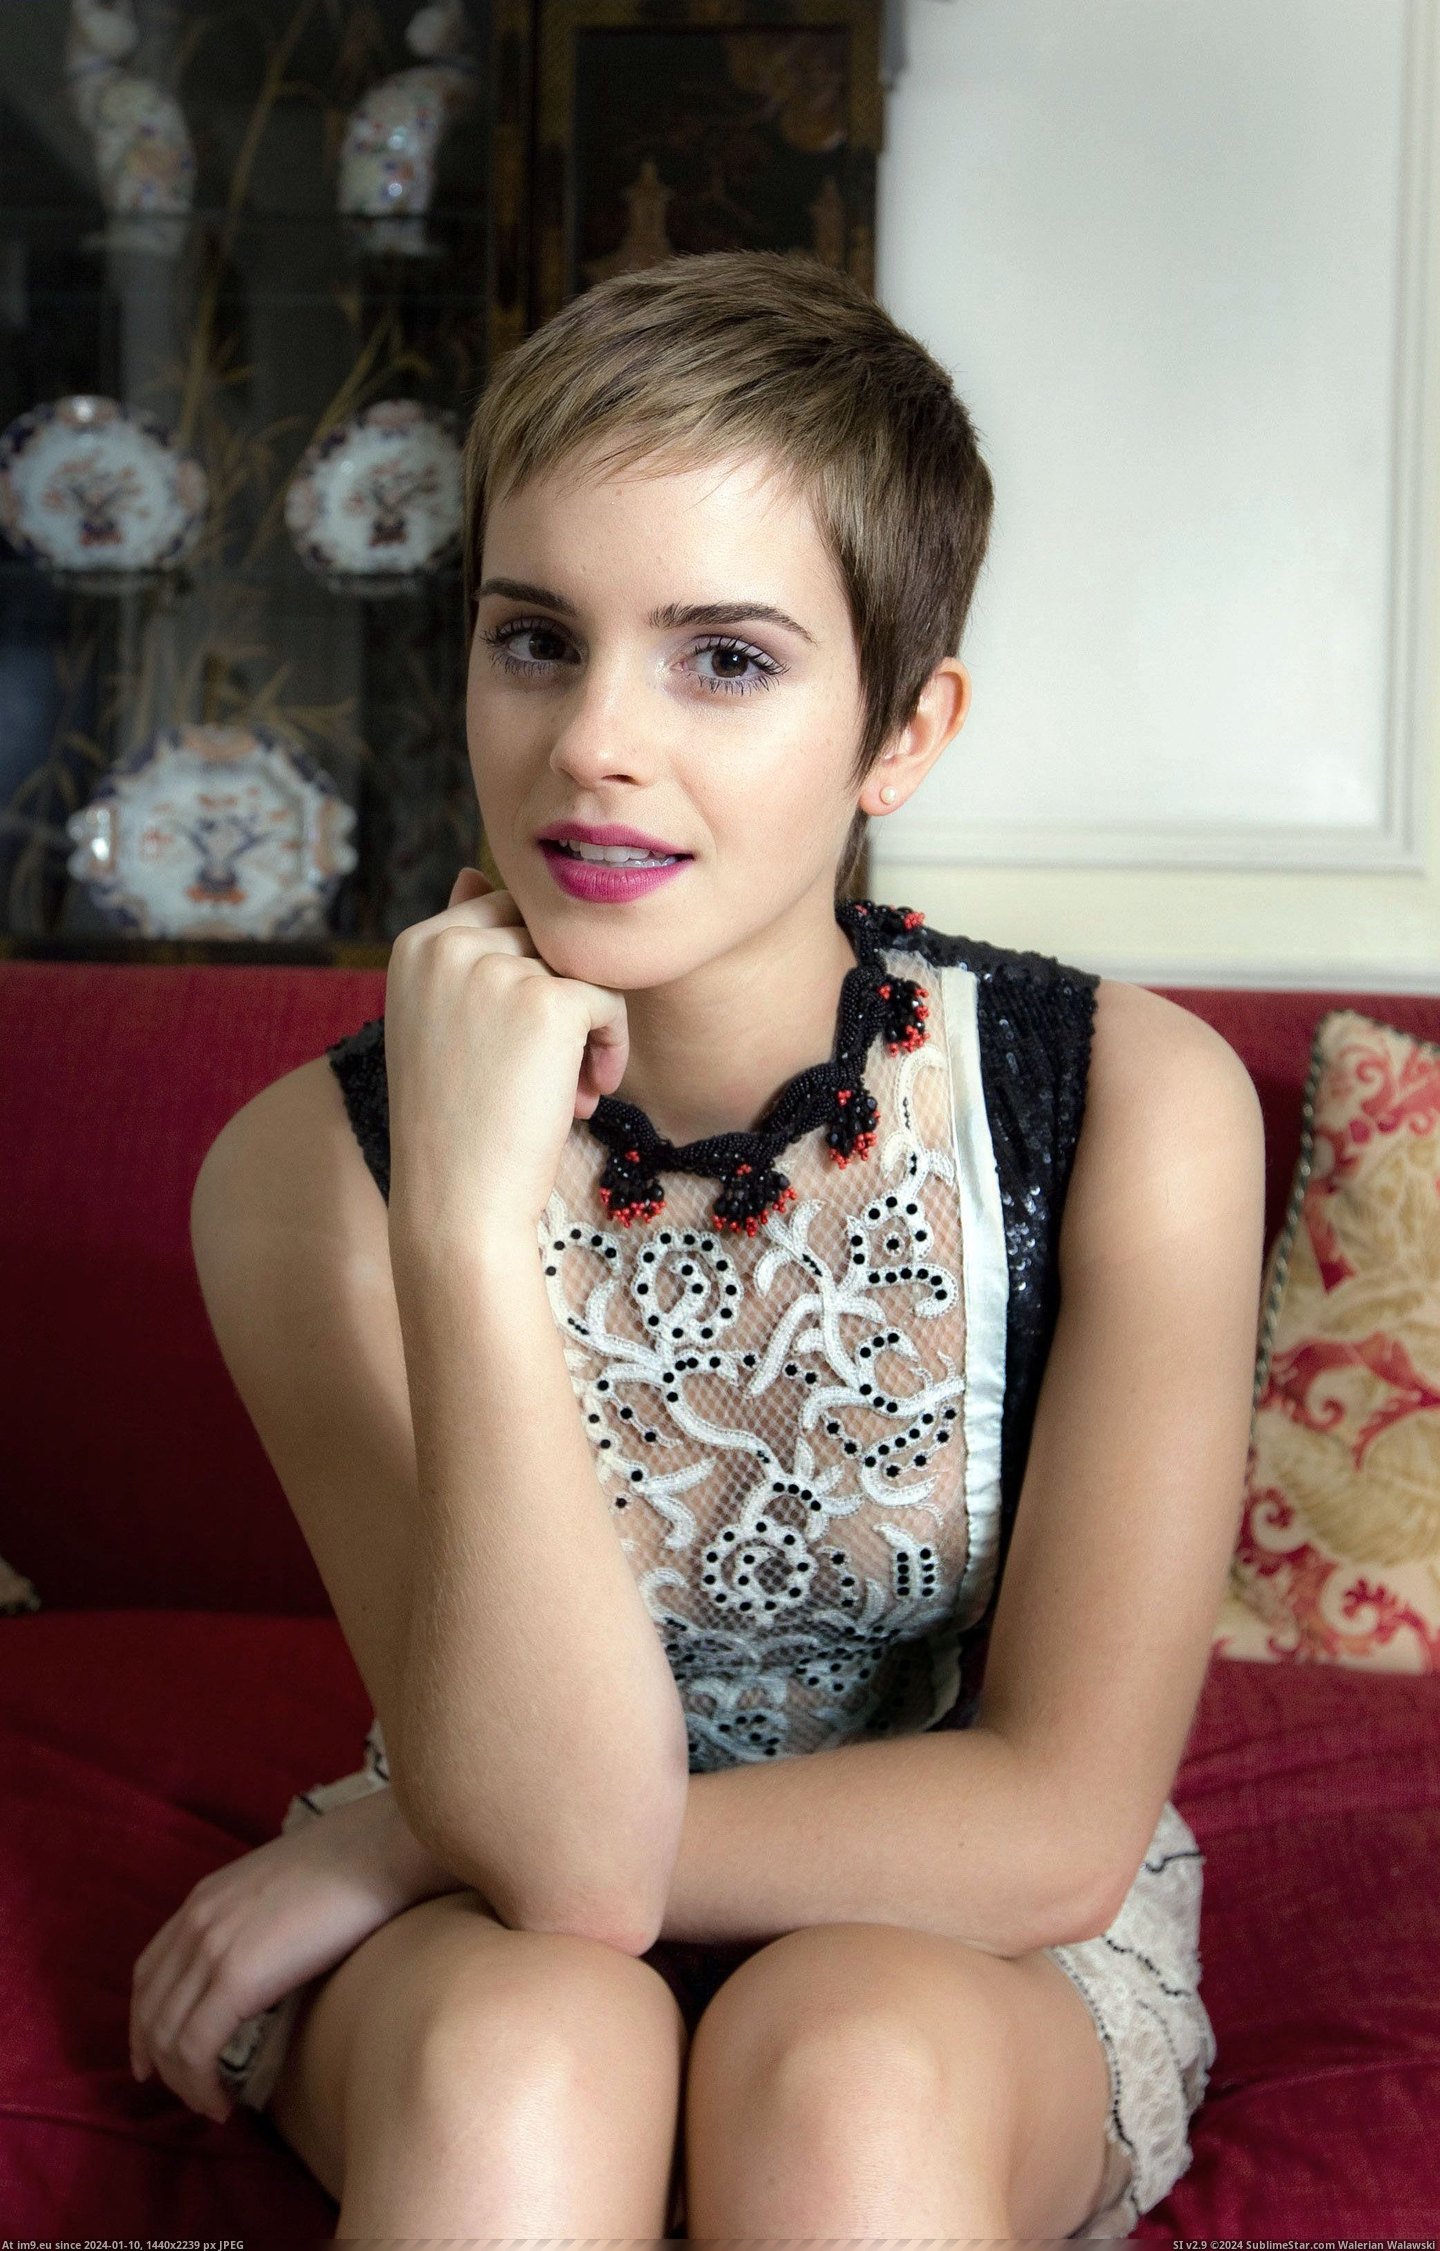 #Photo #Emma #Nip #Owgjxj2 #Watson #Slip Emma Watson Nip Slip Owgjxj2 (emma photo) Pic. (Bild von album Emma Watson Photos))